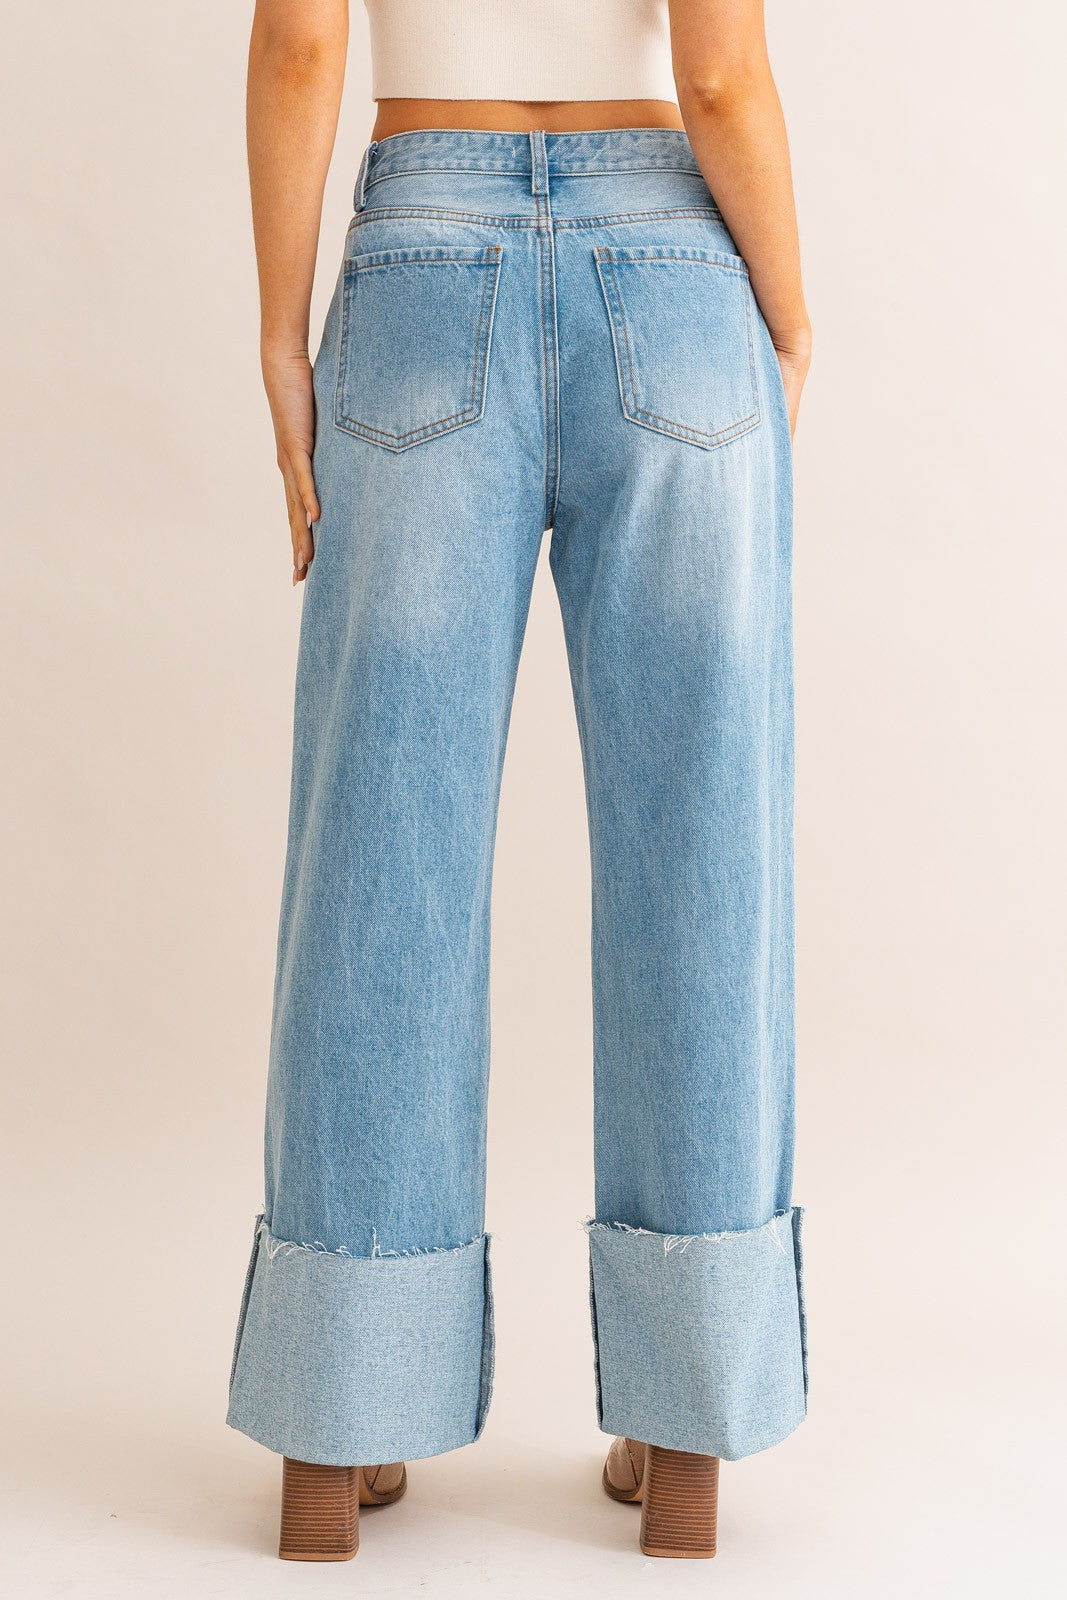 Western inspired high waist wide leg cuffed jeans